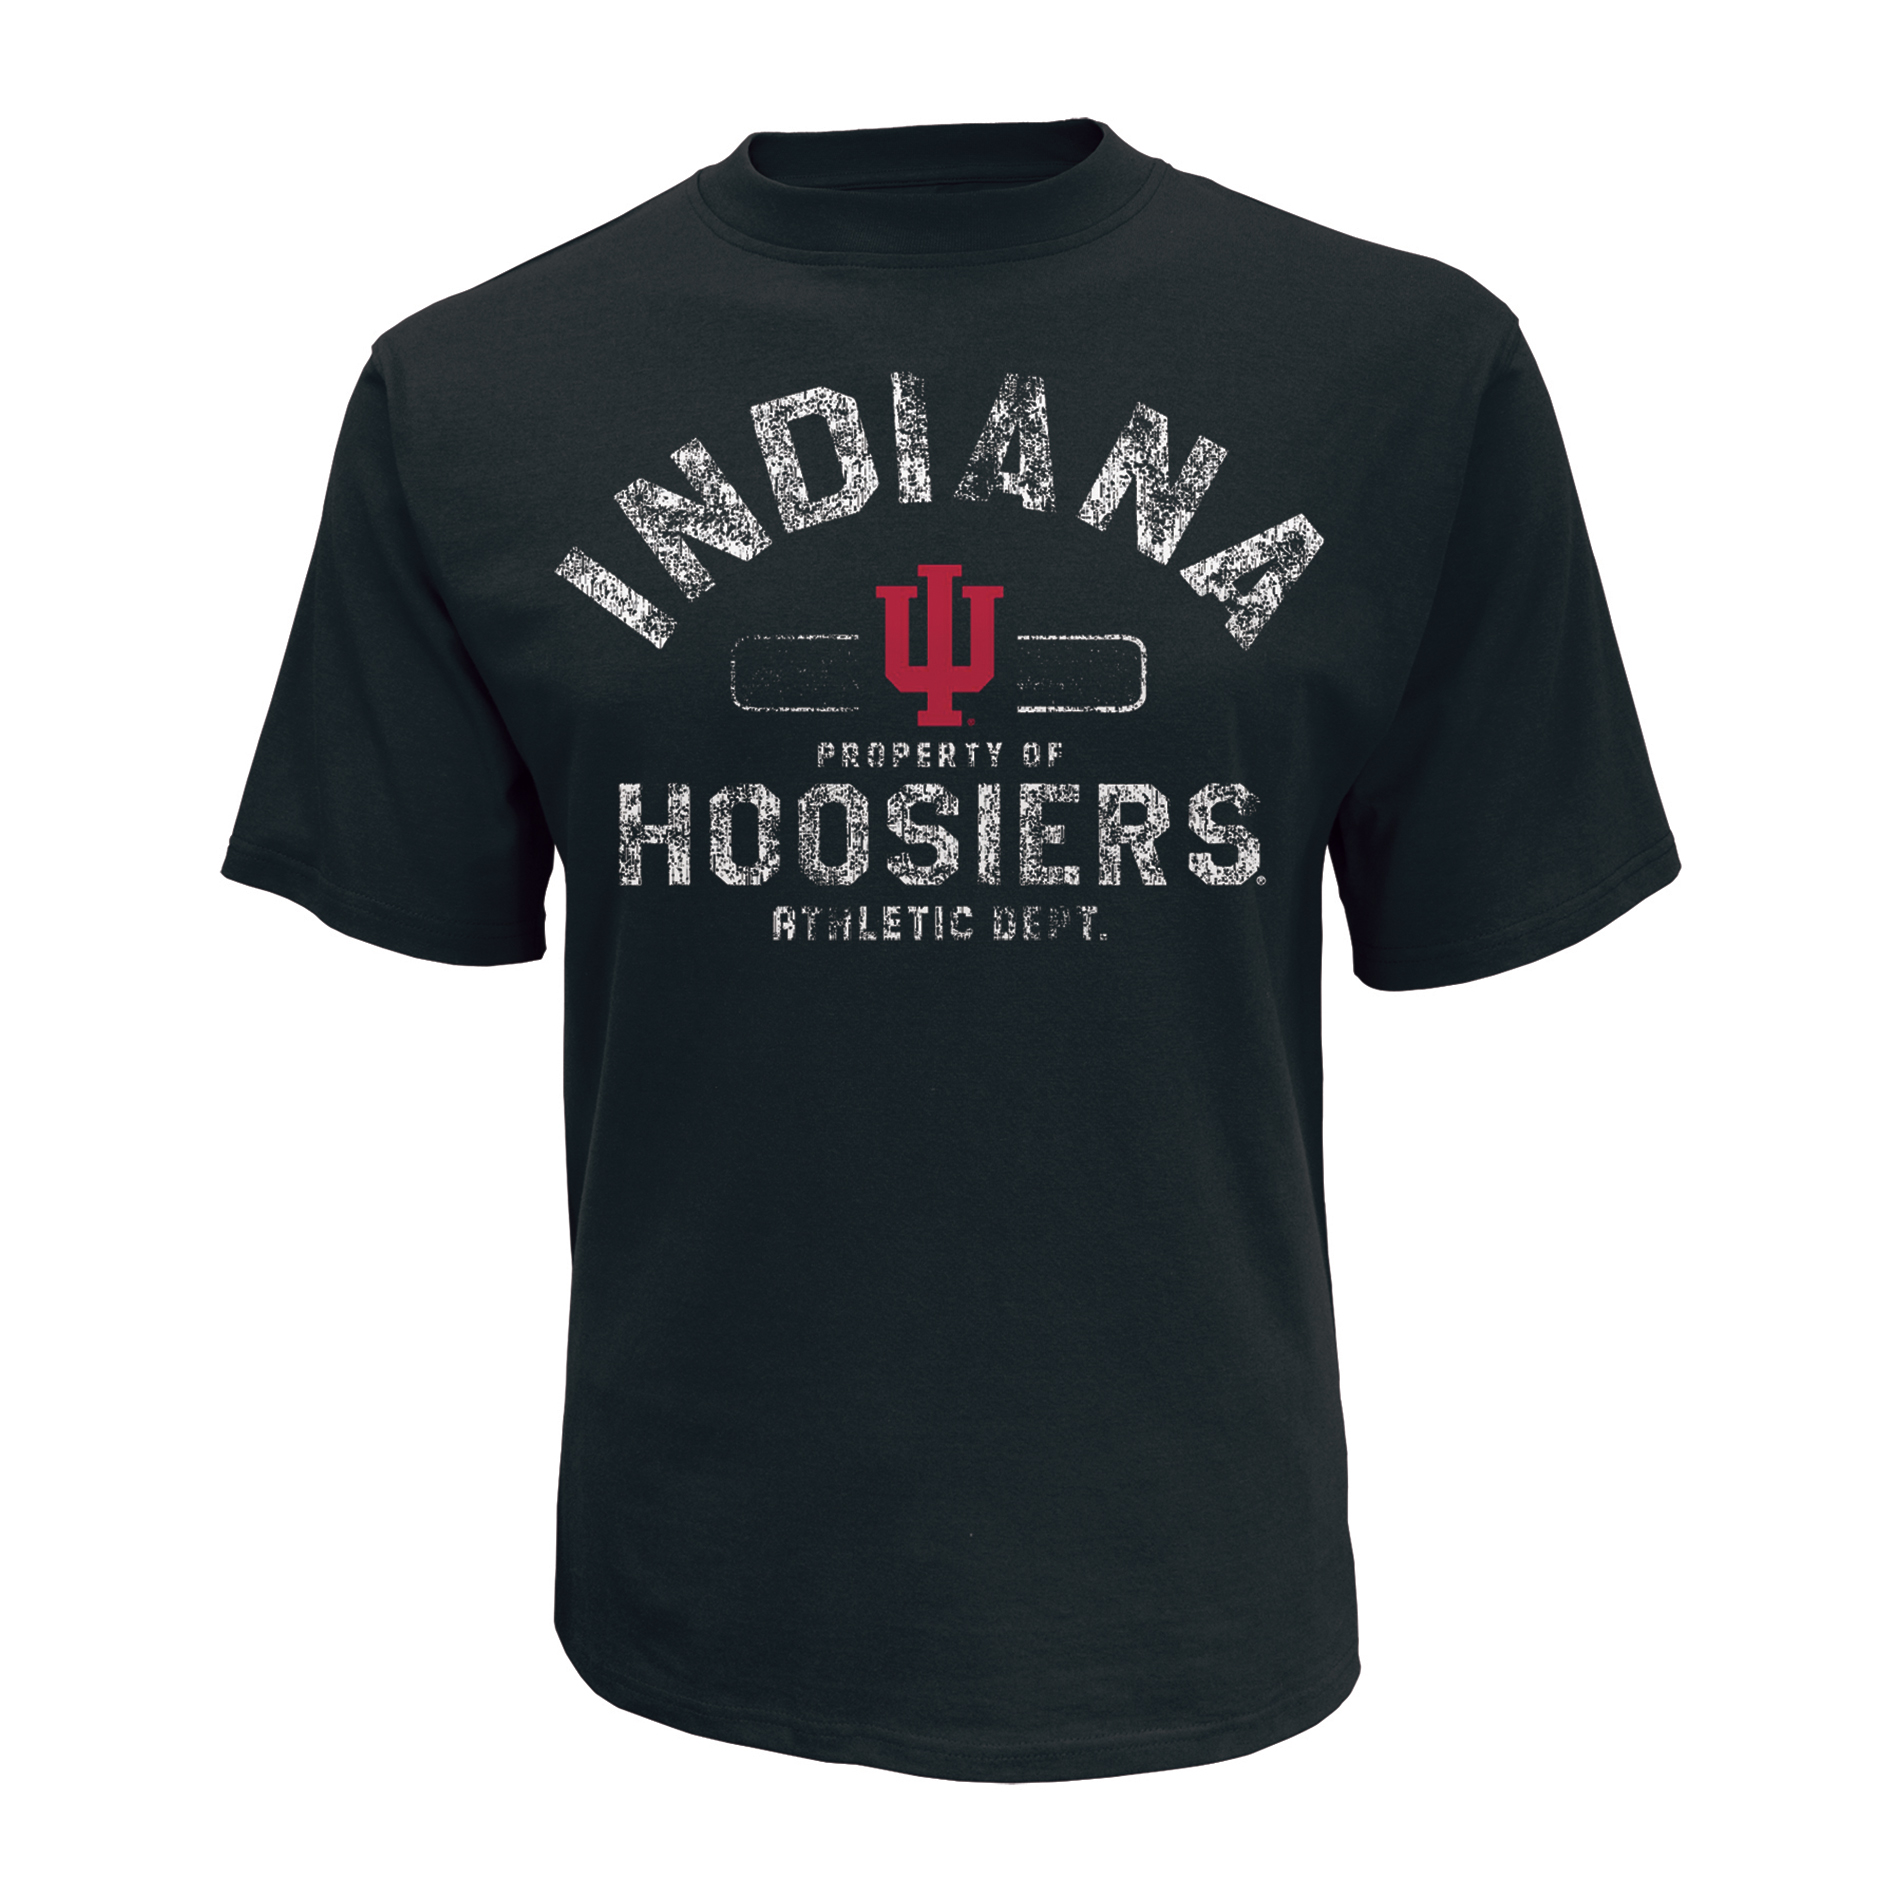 NCAA Men&#8217;s Short-Sleeve T-Shirt - Indiana Hoosiers